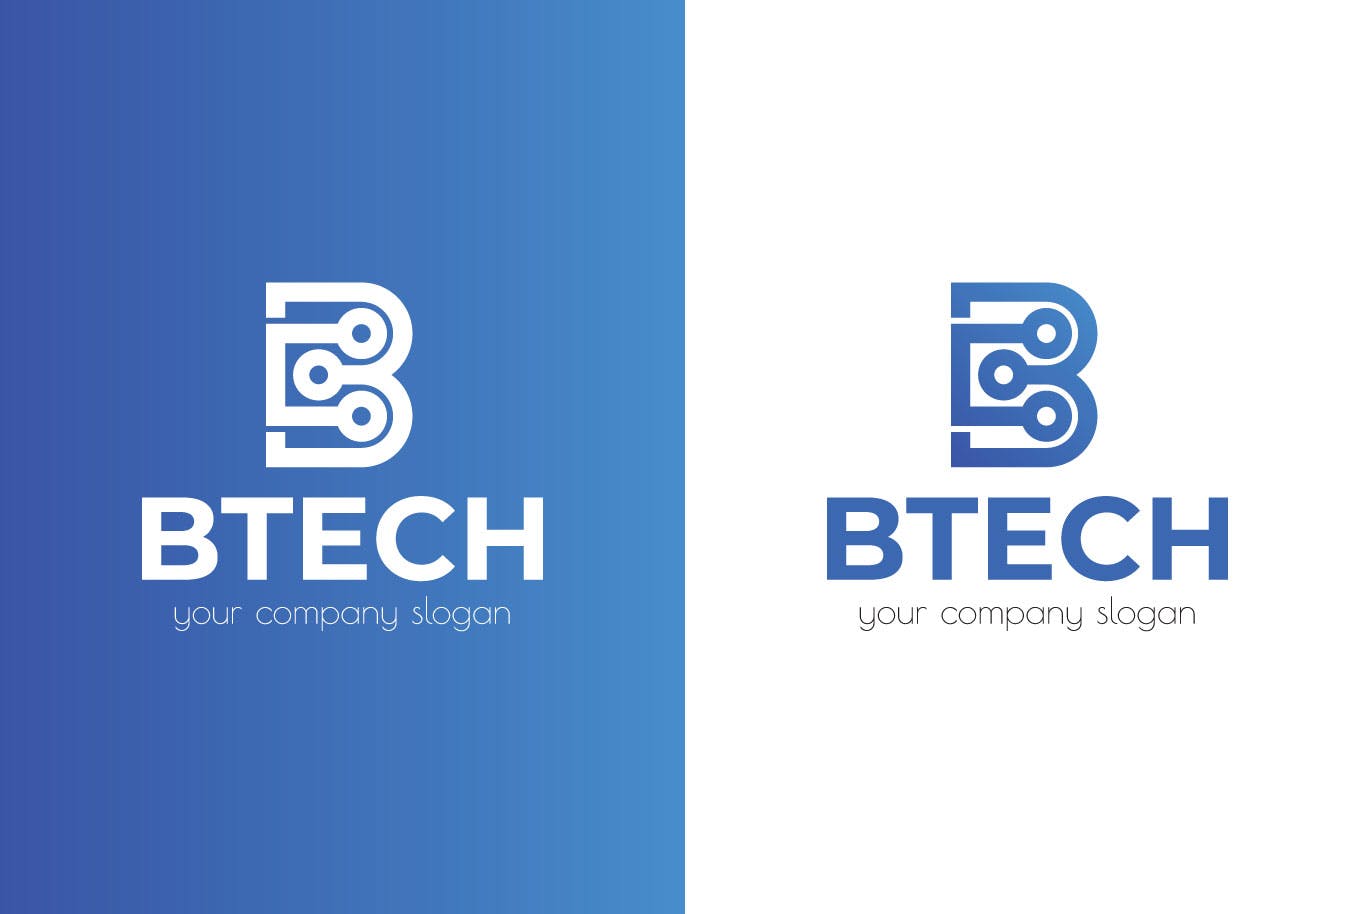 基于B字母图形的企业Logo设计第一素材精选模板 Letter Based Business Logo Template插图(1)